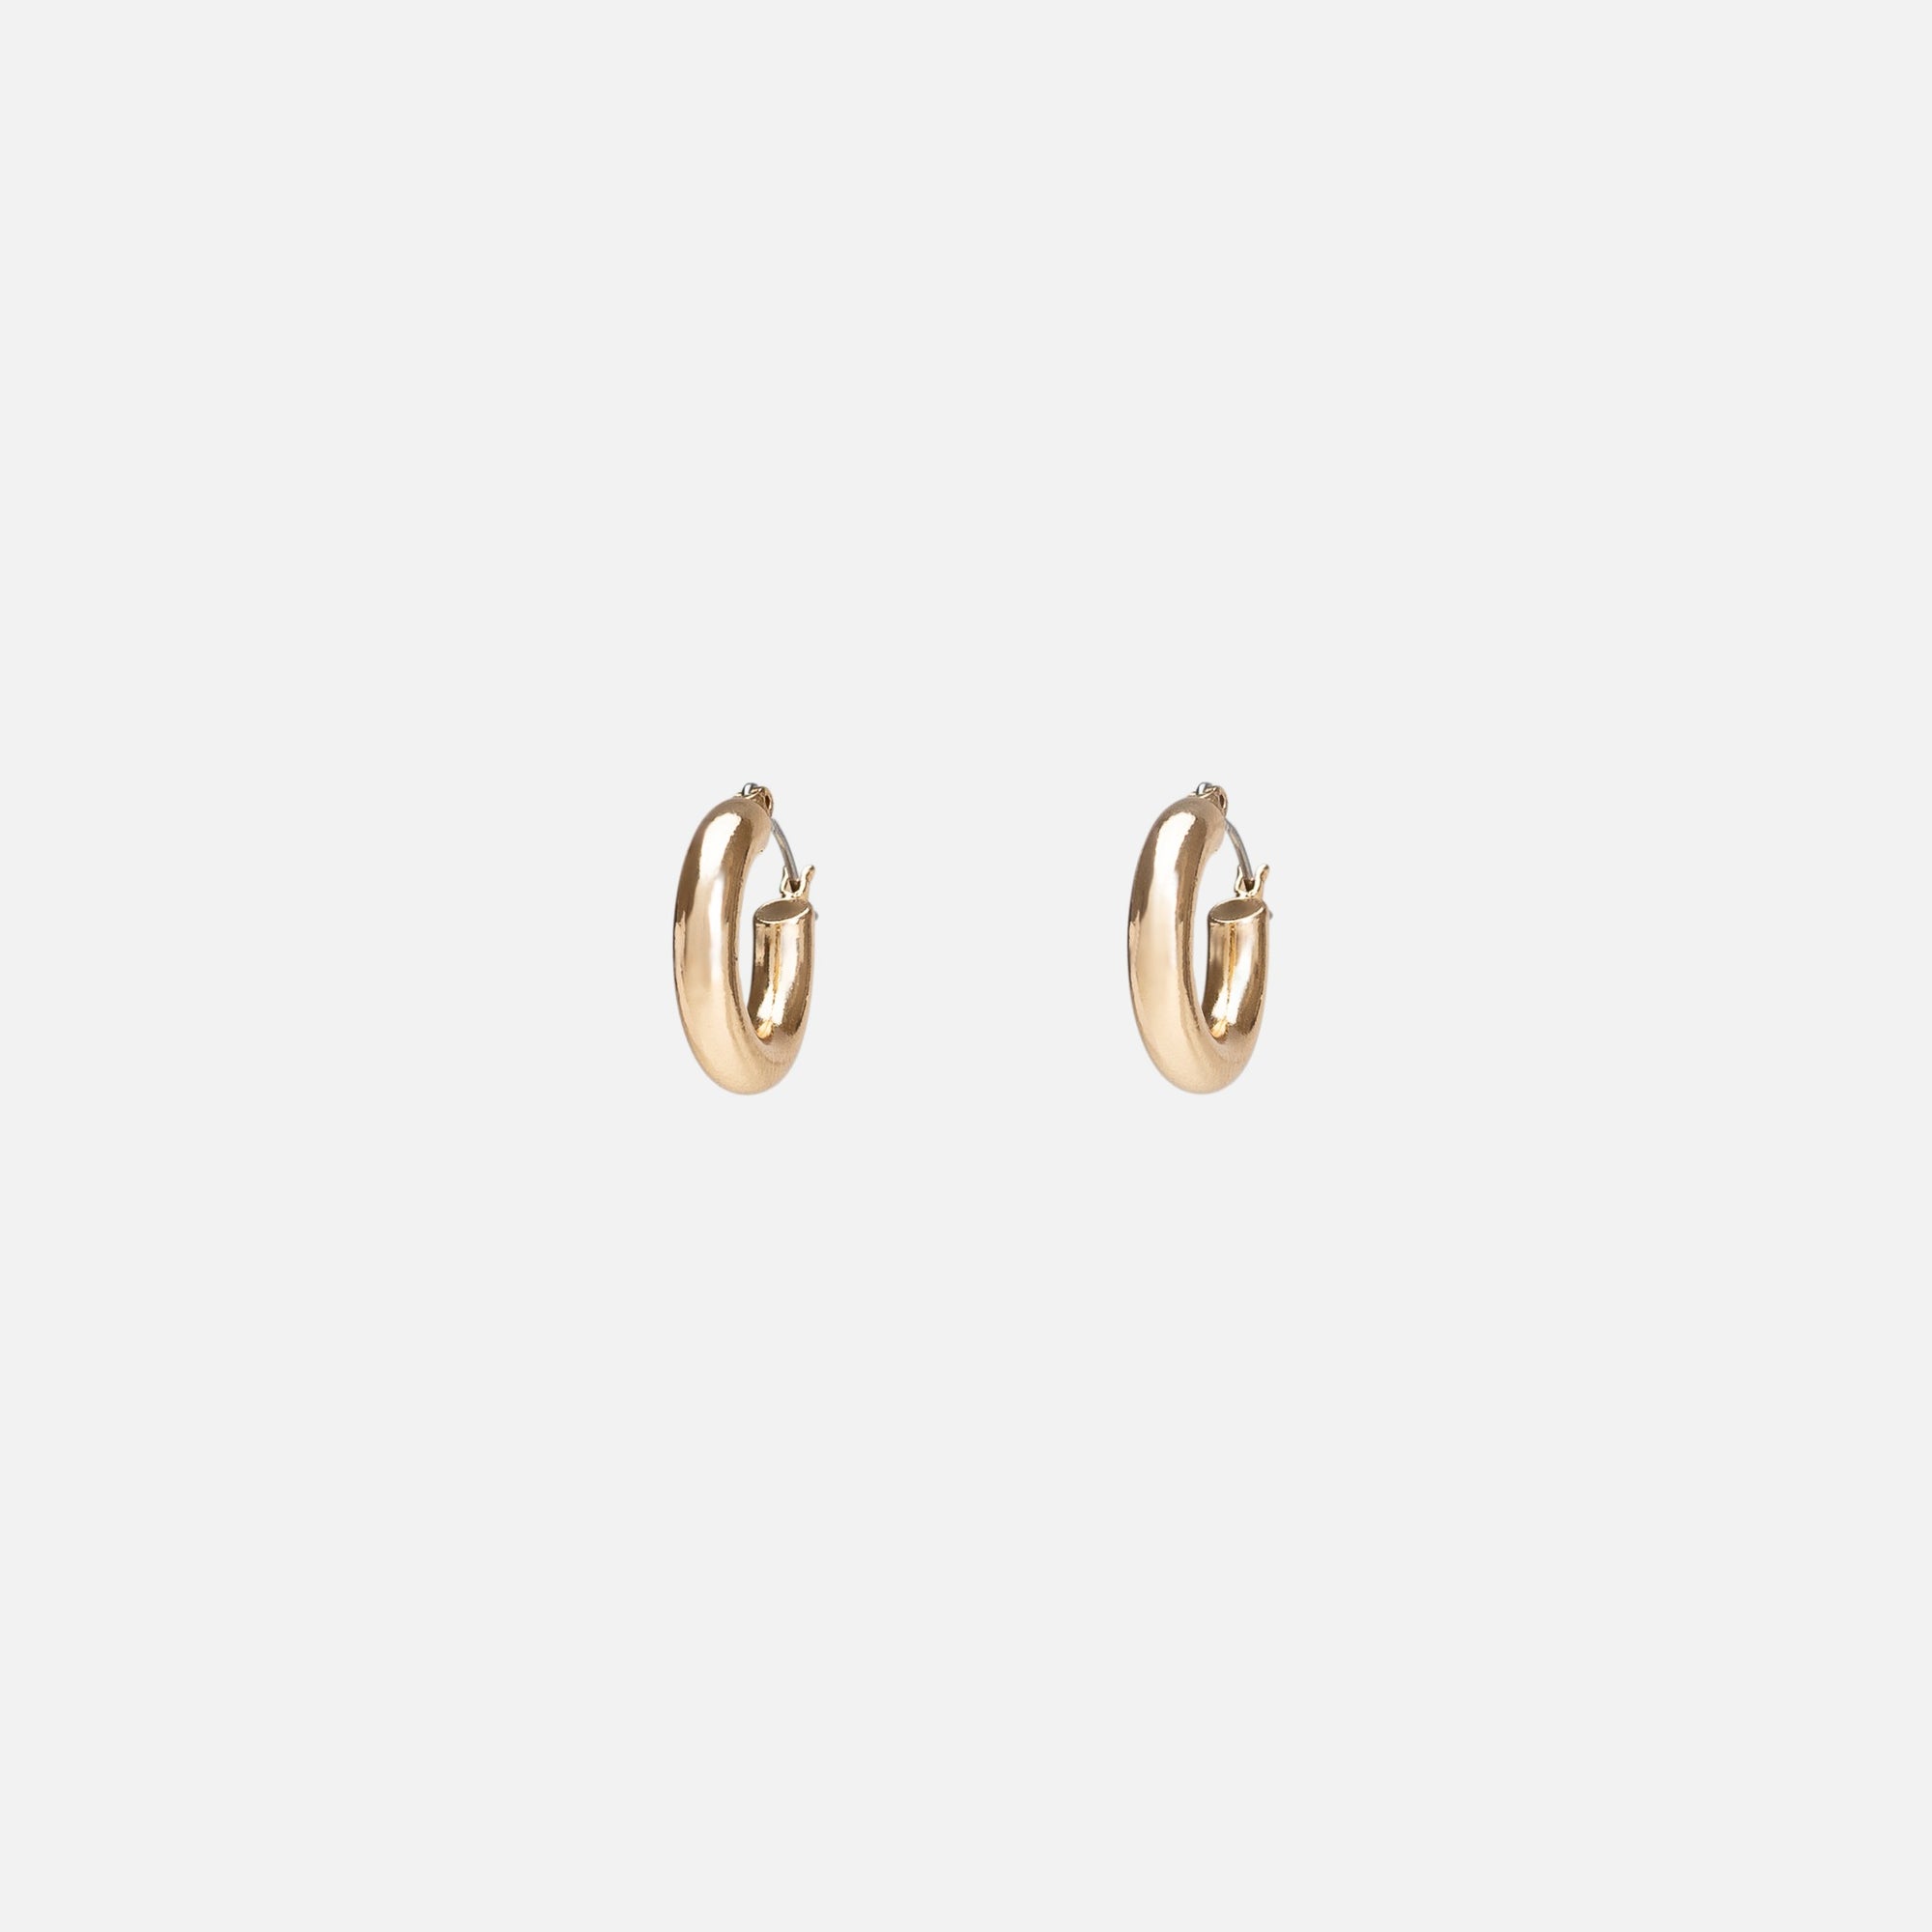 Golden hoop earrings with interchangeable charms 